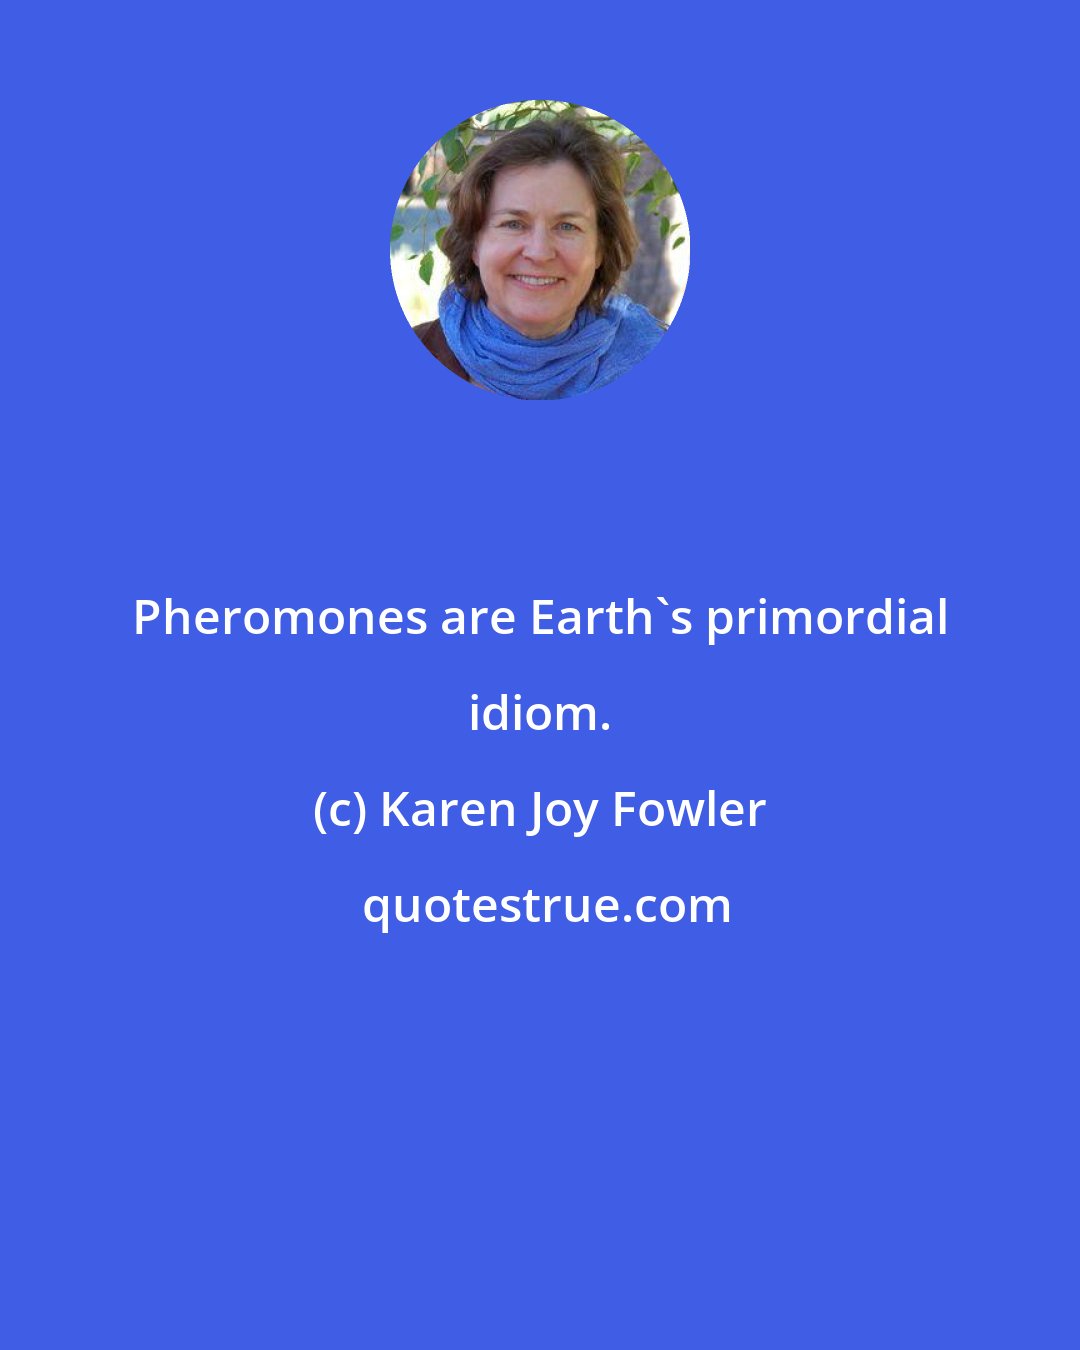 Karen Joy Fowler: Pheromones are Earth's primordial idiom.